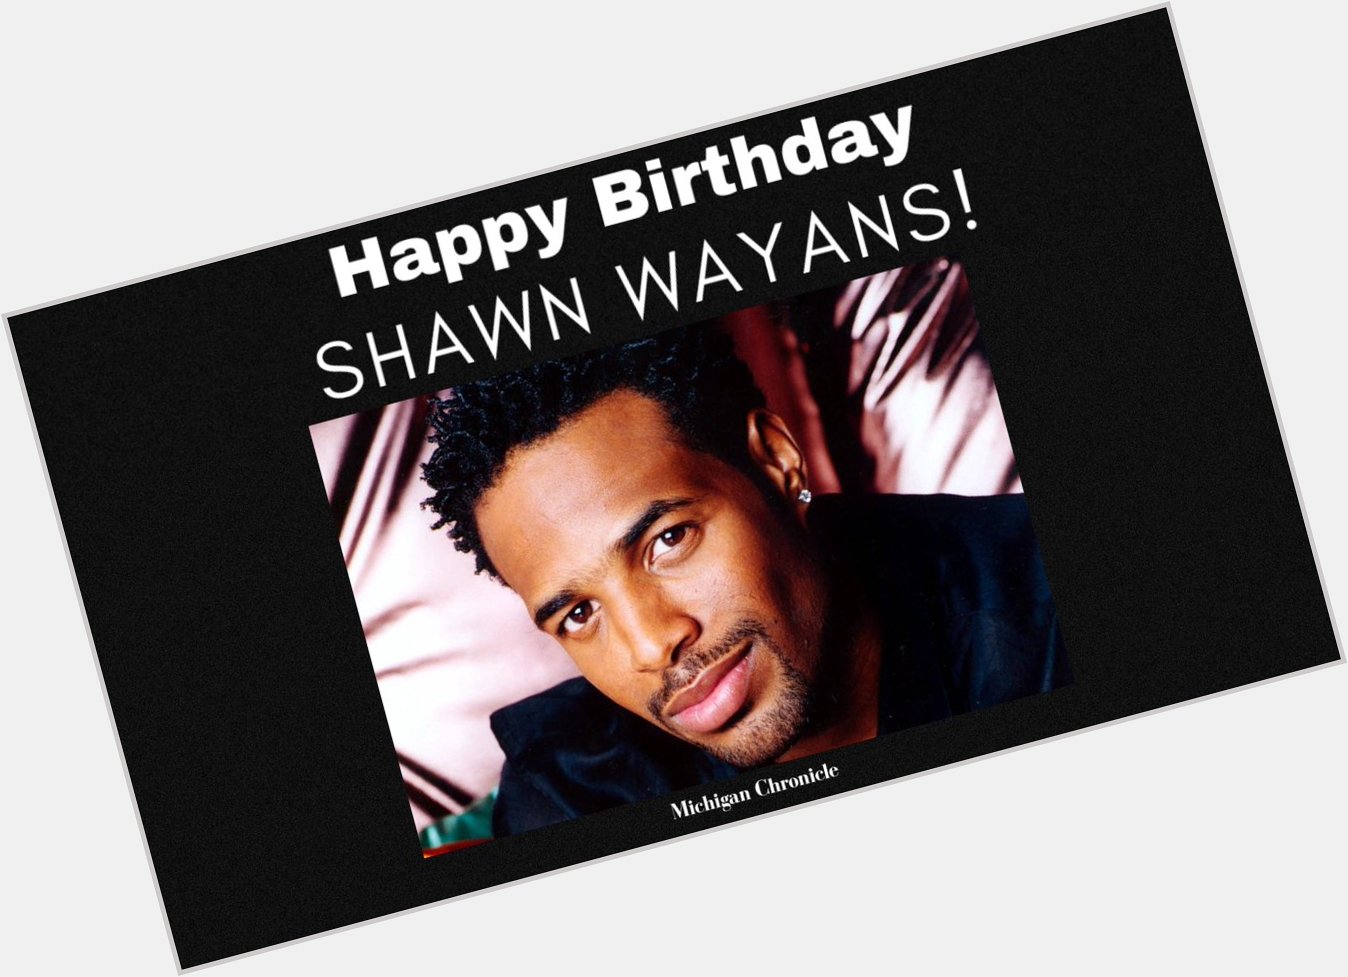 Happy birthday to Shawn Wayans! 